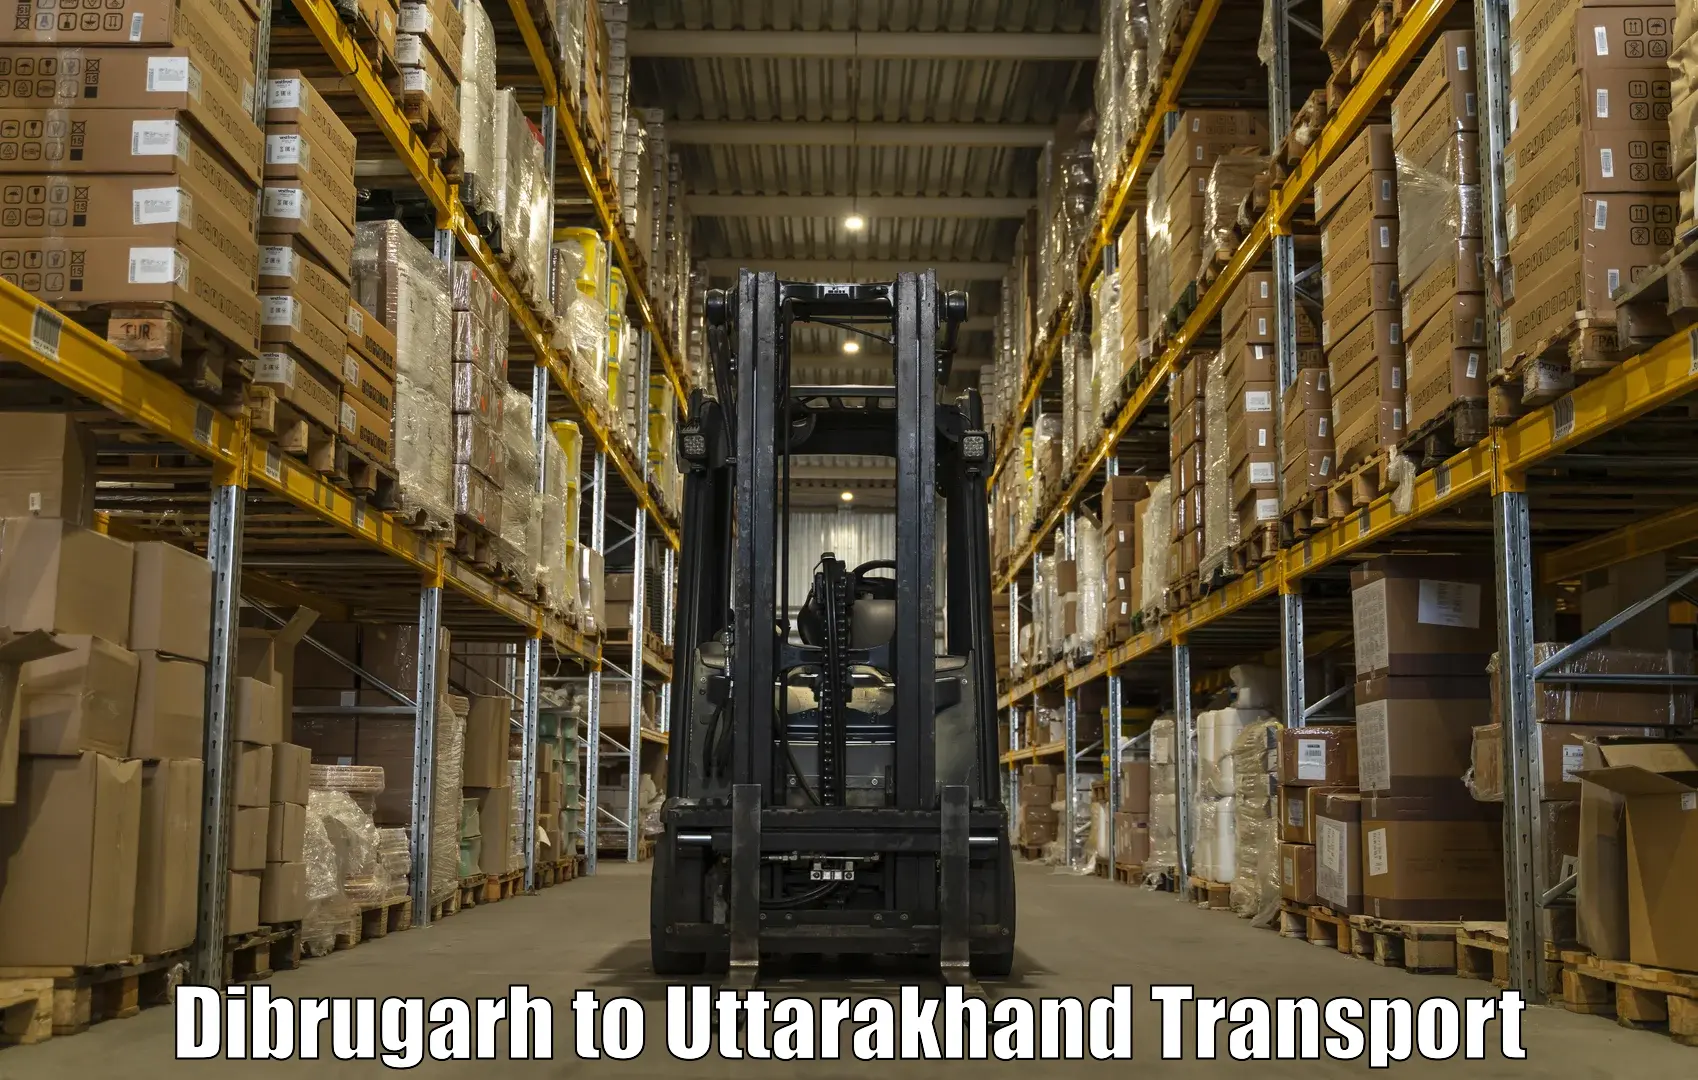 Sending bike to another city Dibrugarh to Uttarakhand